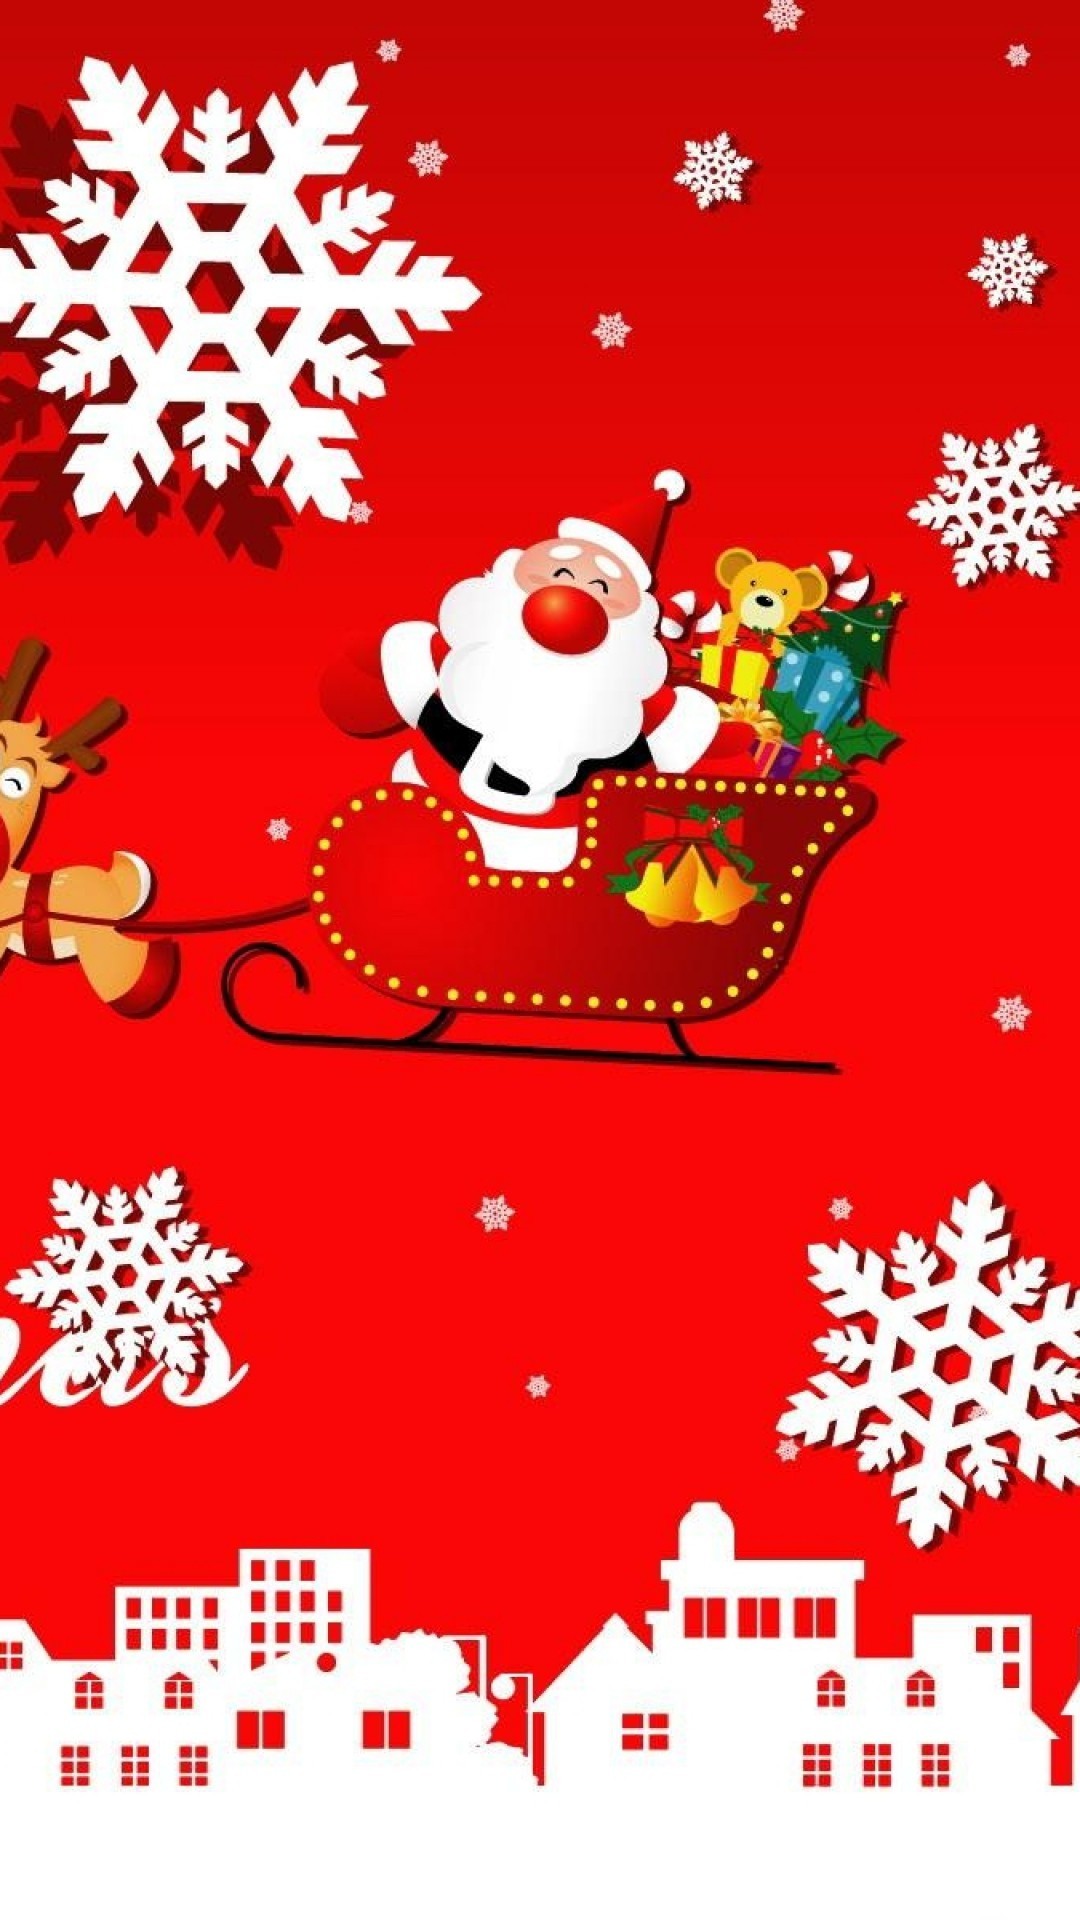 1080x1920 Santa on the sled Christmas iPhone 6 plus wallpaper ideas